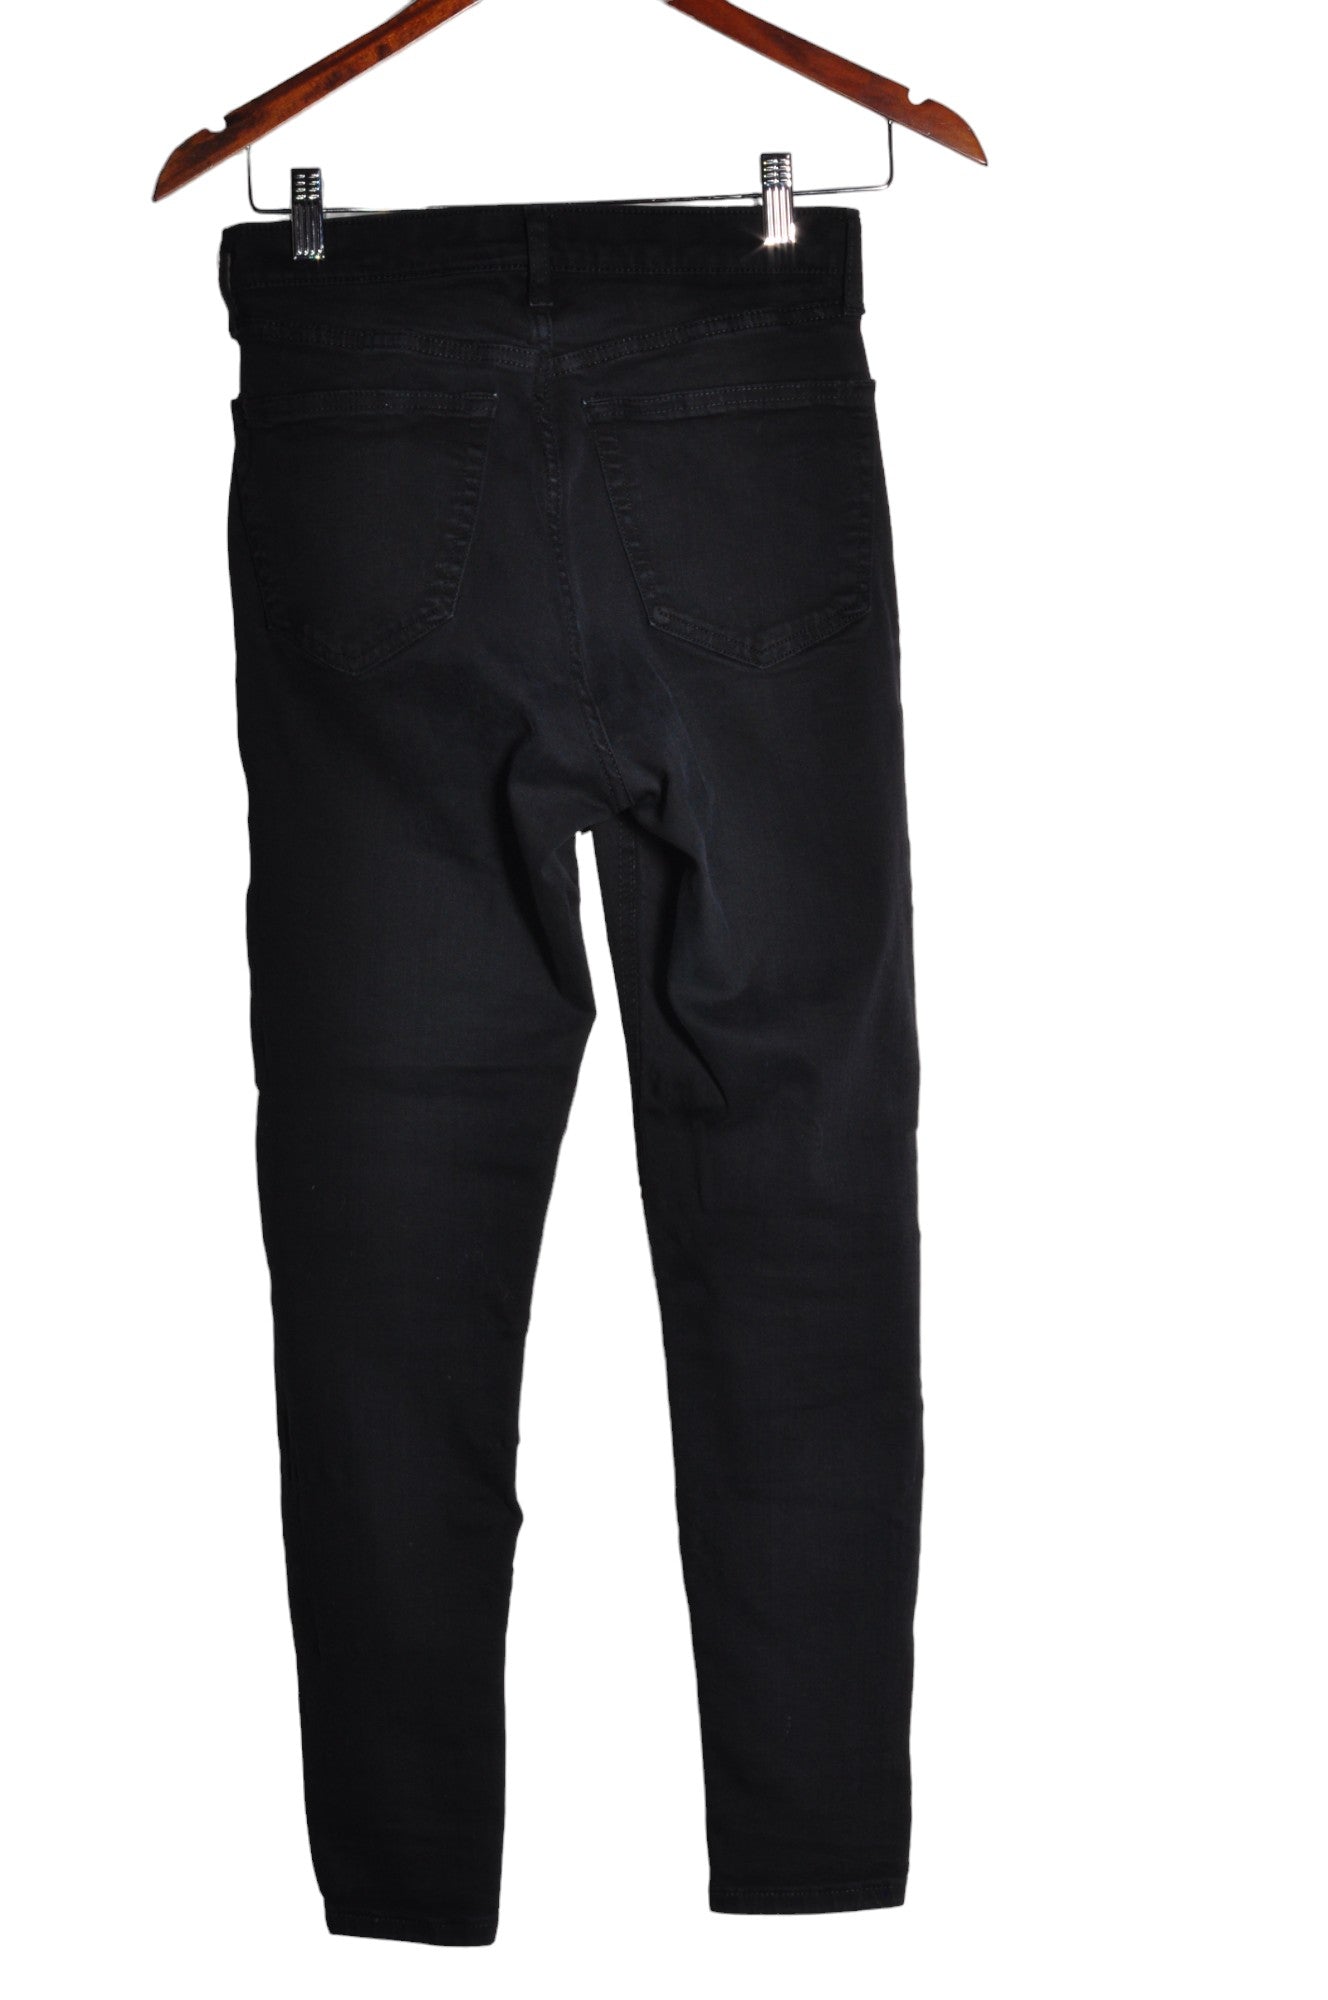 UNBRANDED Women Straight-Legged Jeans Regular fit in Black - Size 28x30 | 14.99 $ KOOP